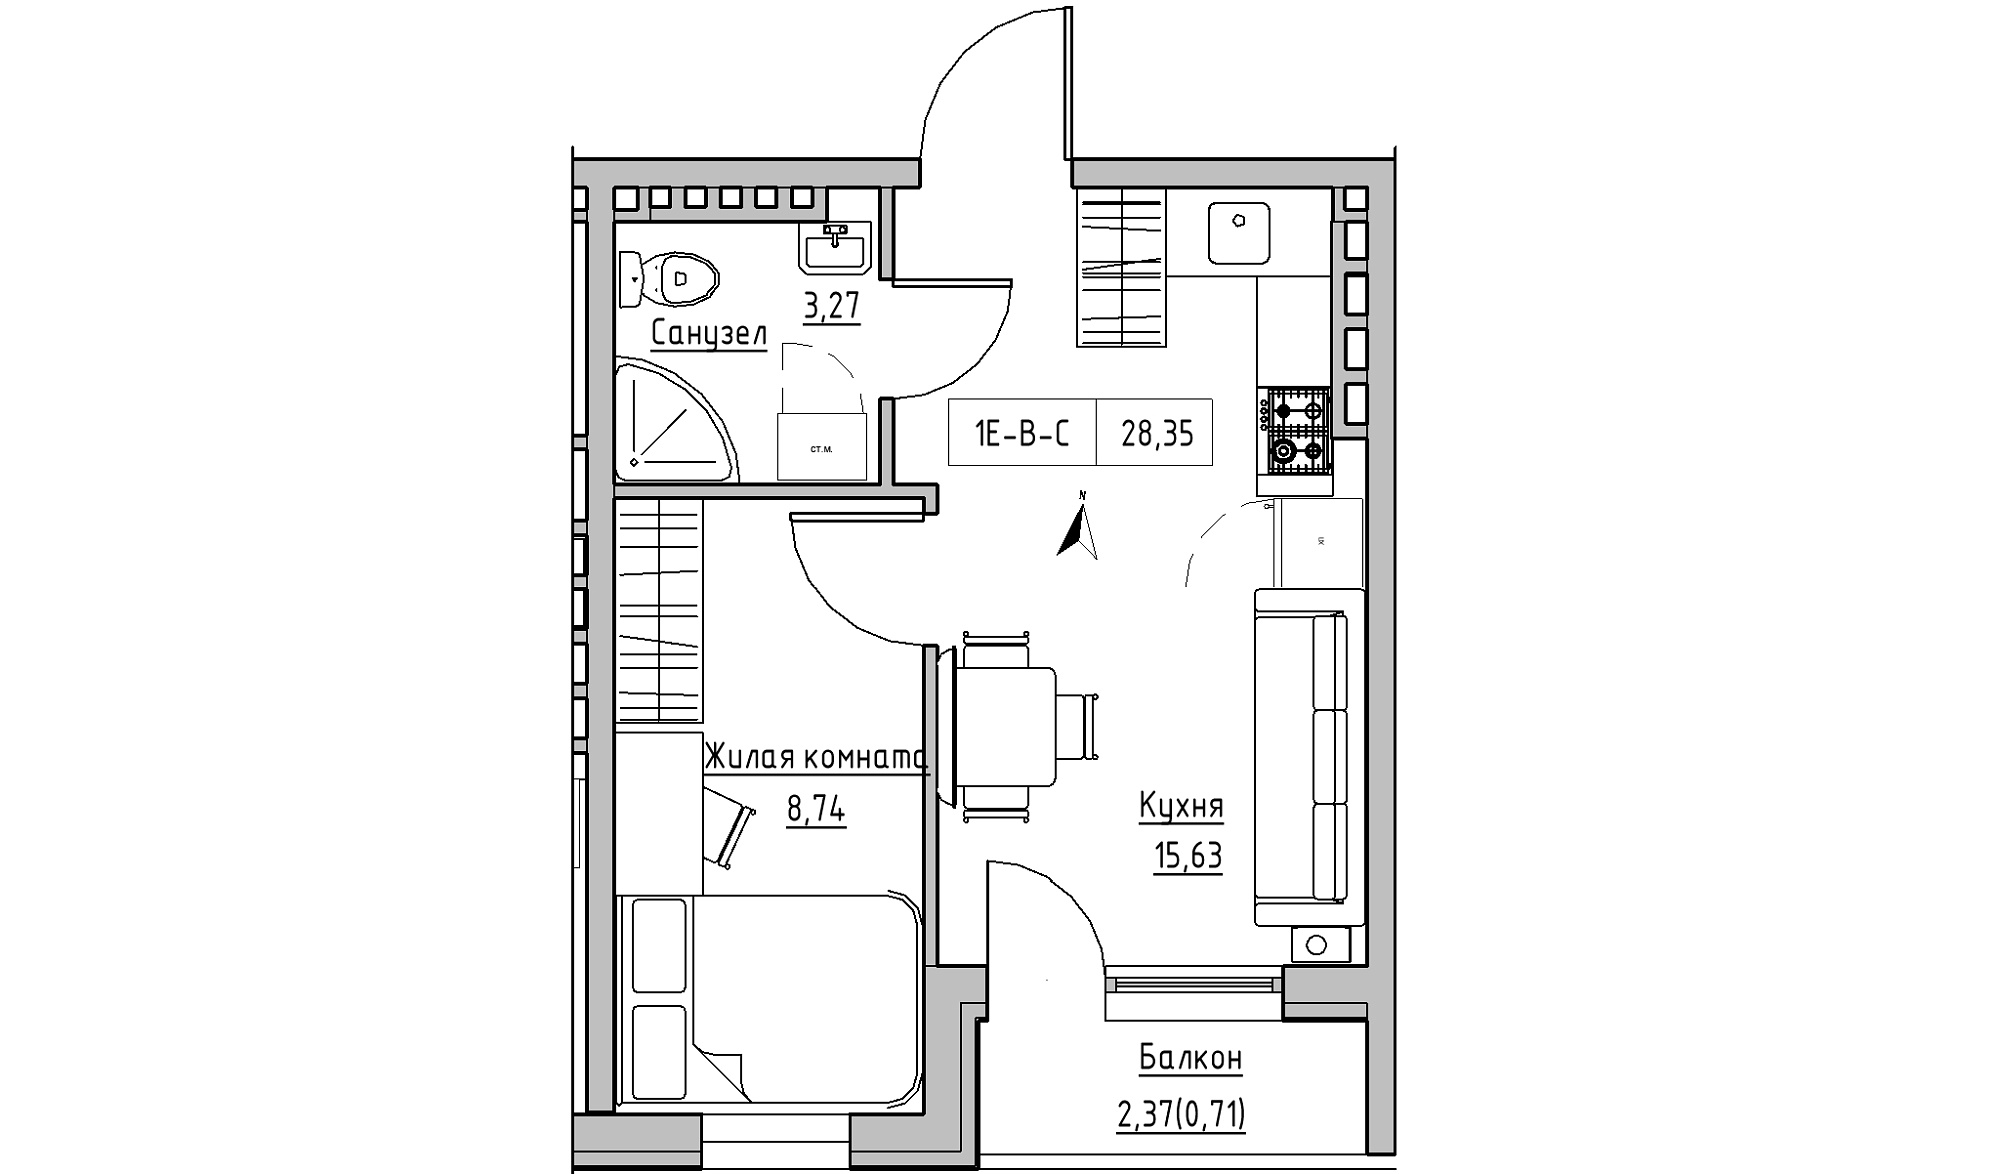 Planning 1-rm flats area 28.35m2, KS-024-05/0008.